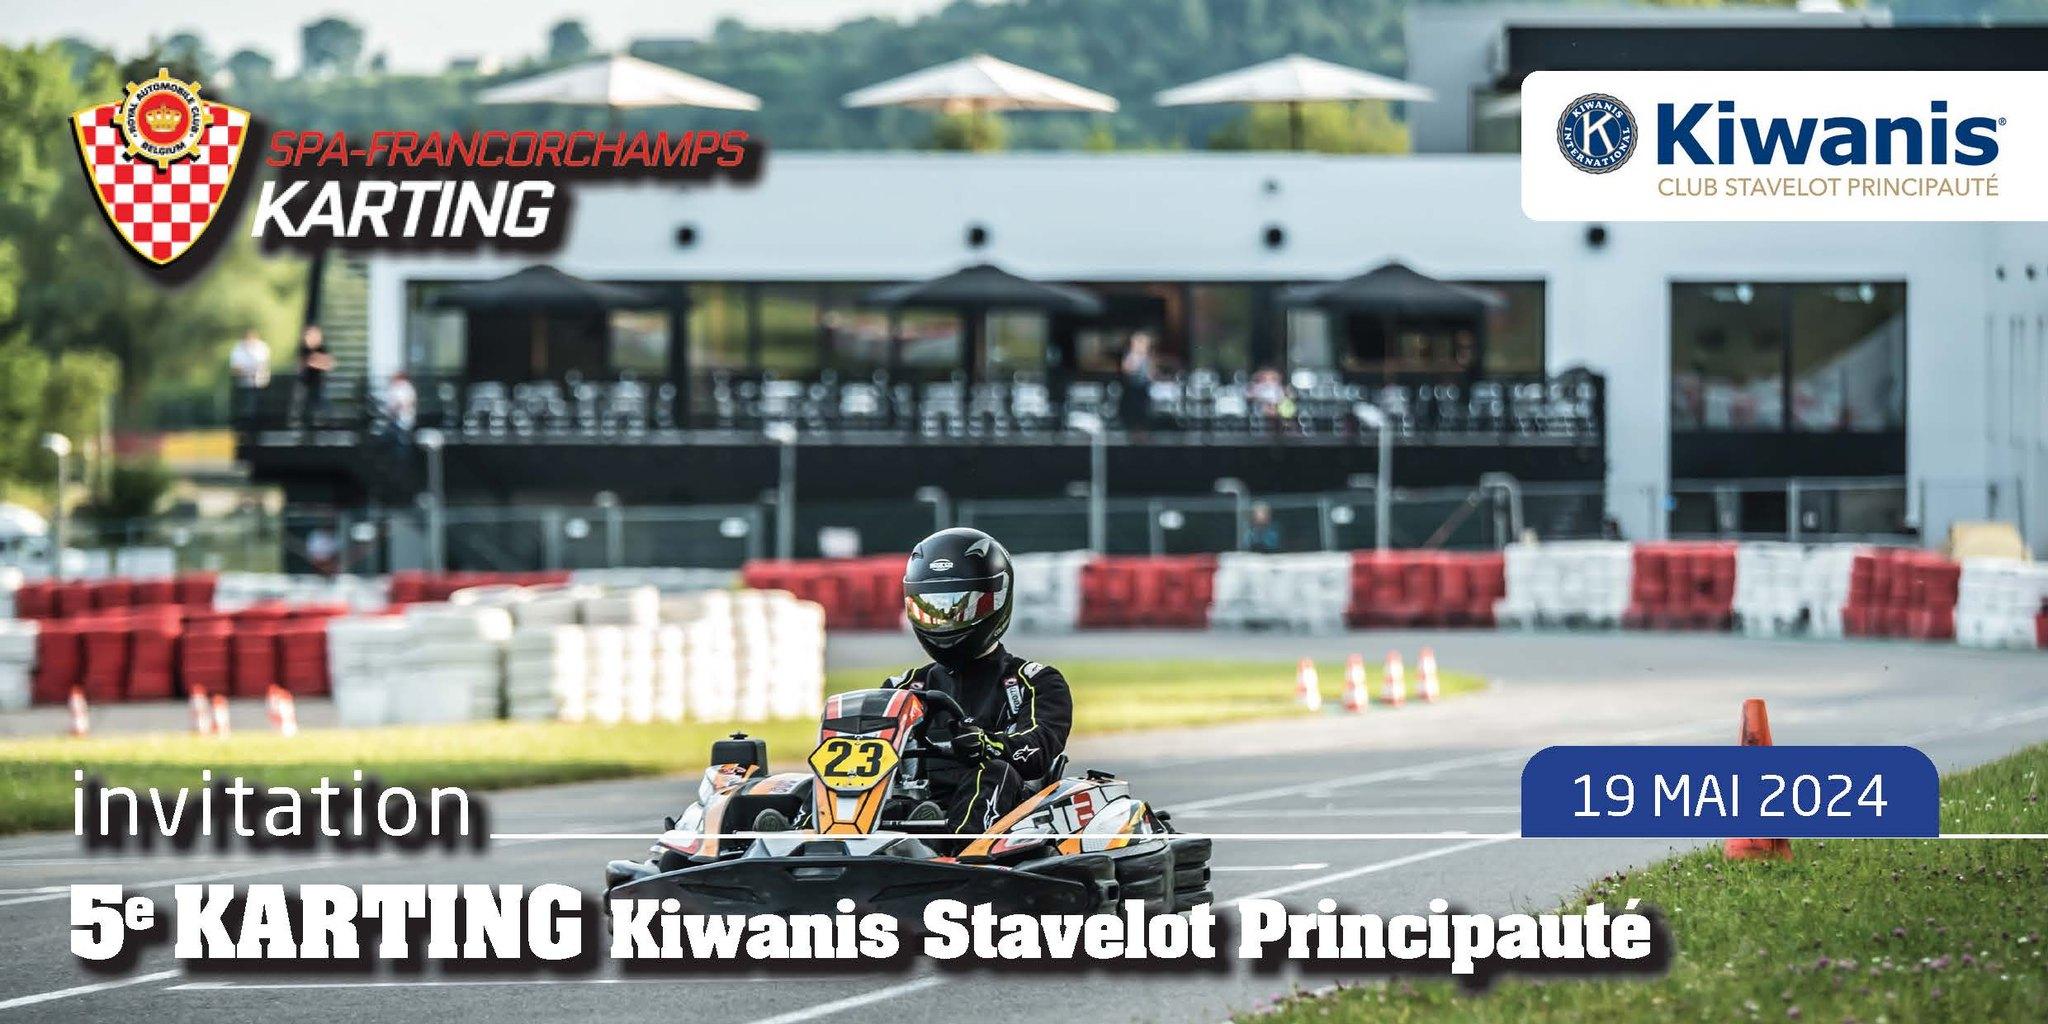 Kiwanis Karting Francorchamps